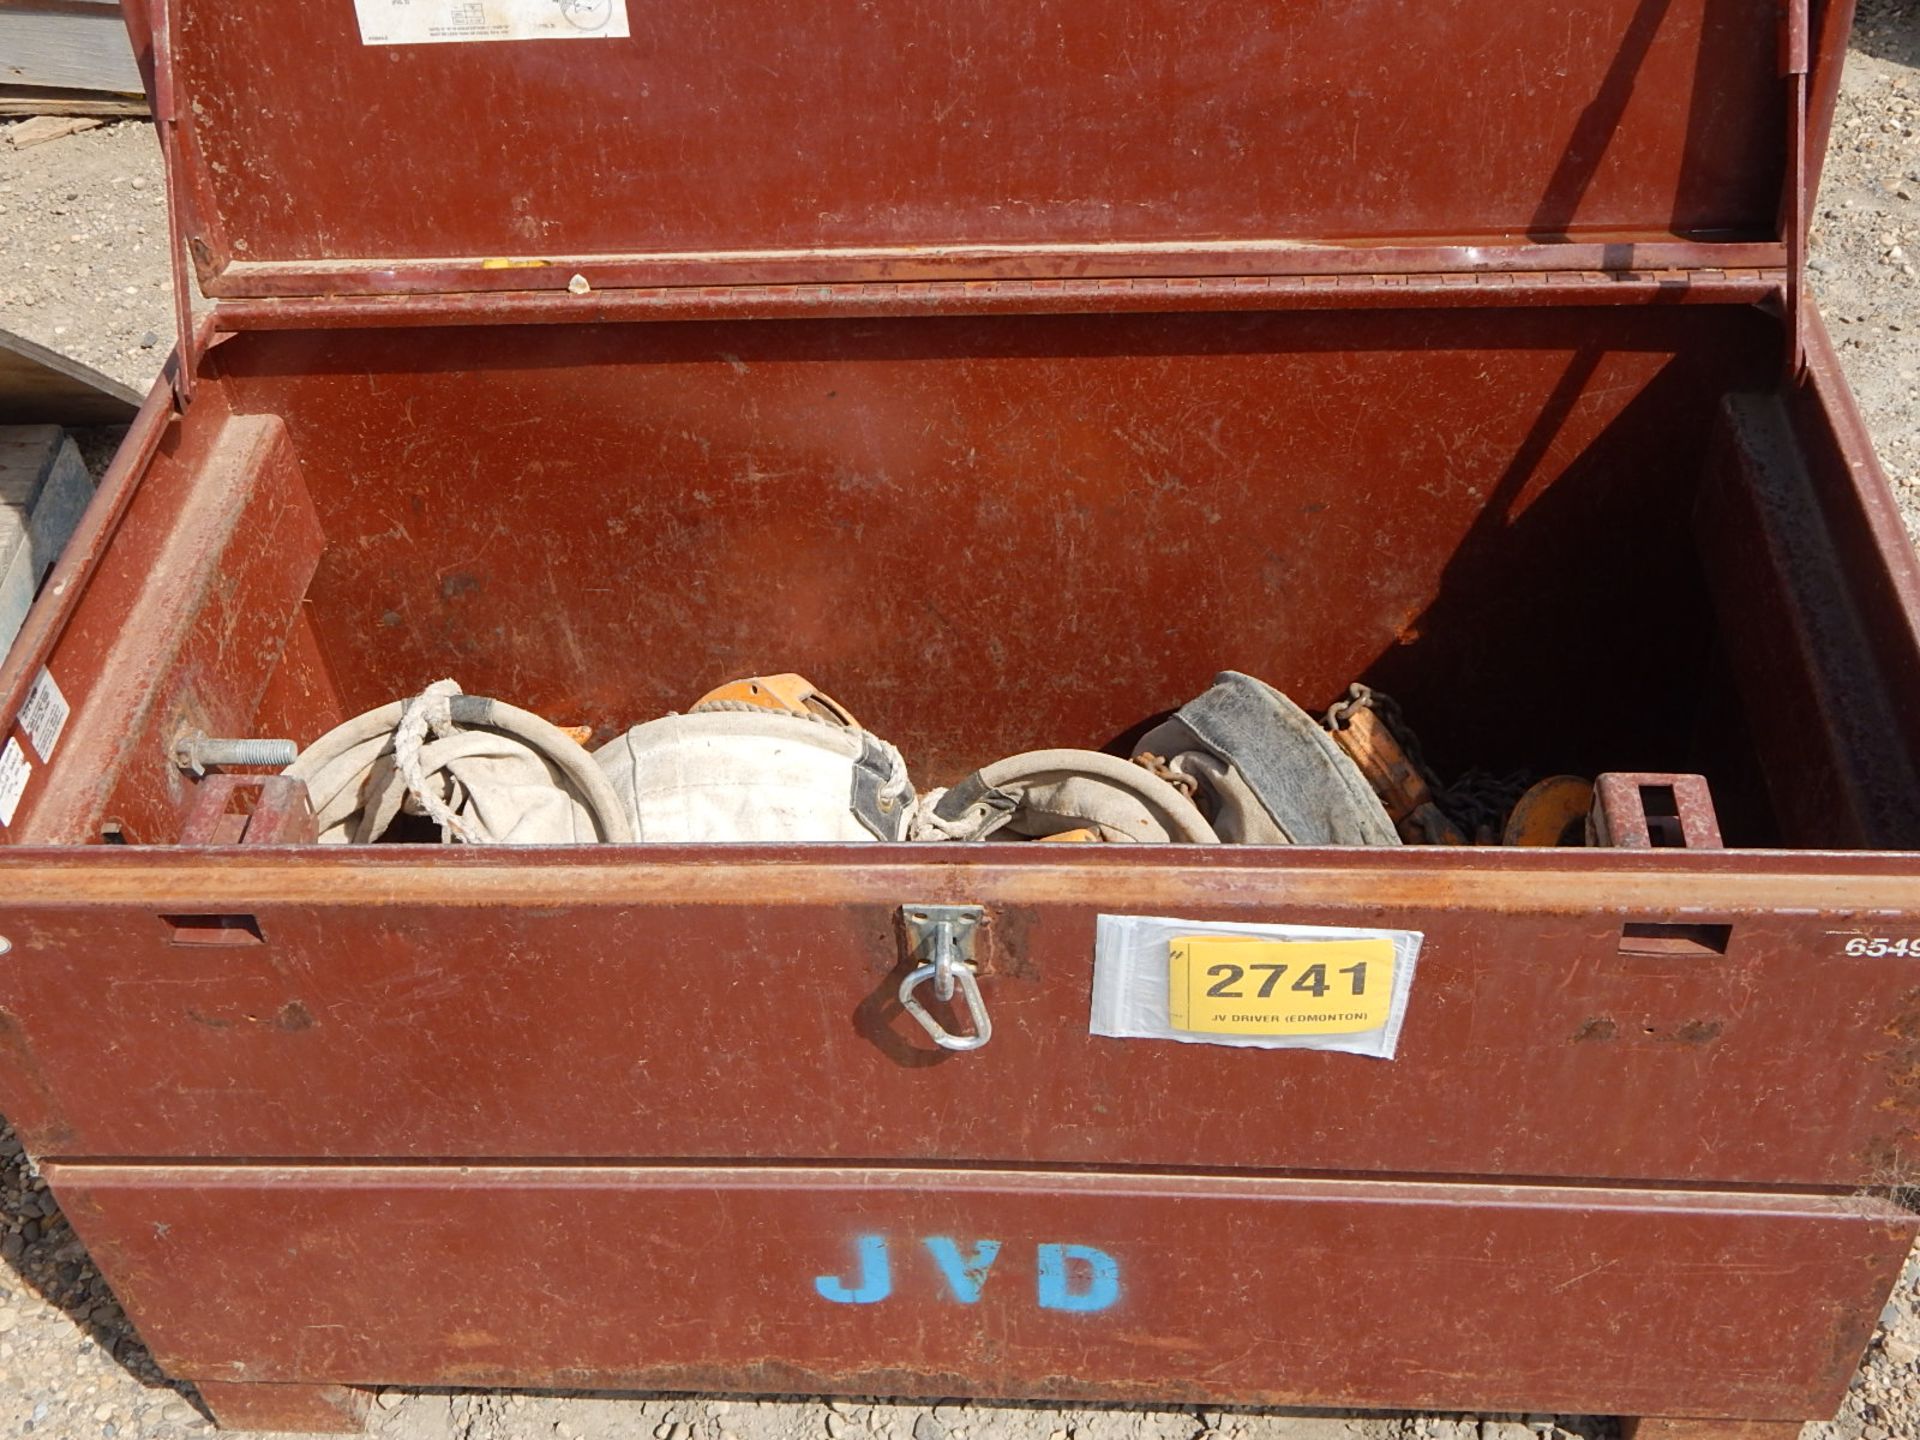 LOT/ JOB BOX WITH CONTENTS CONSISTING OF KITO CHAIN FALLS AND KUNY BAGS